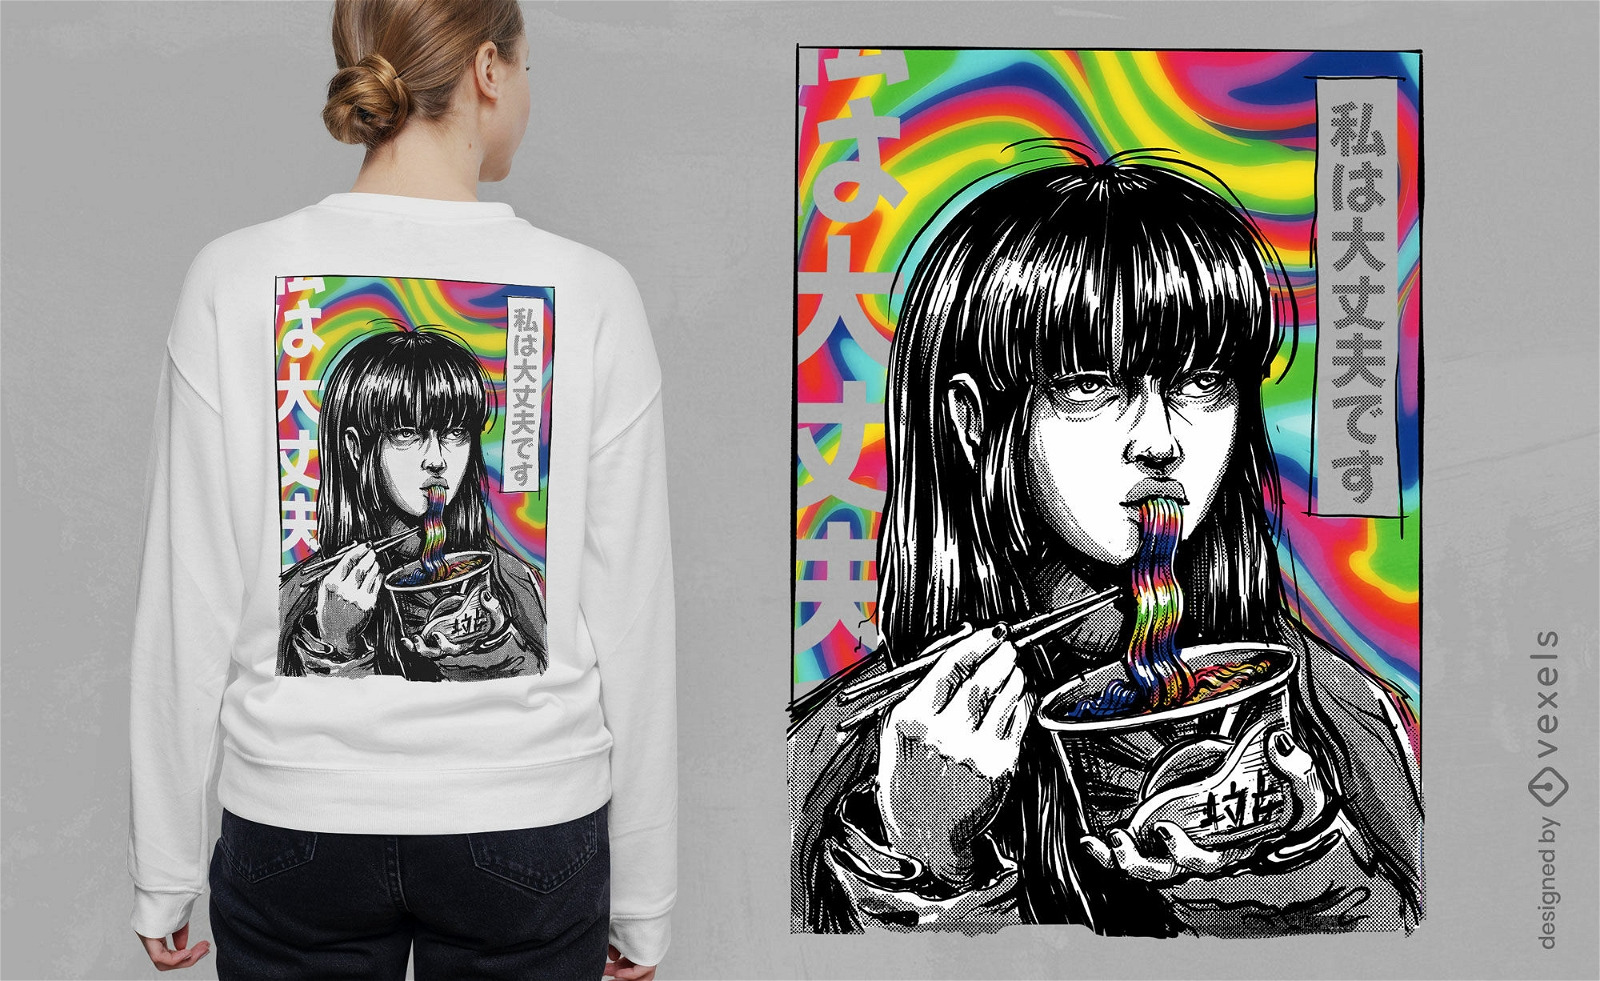 Japanese girl psychedelic t-shirt design